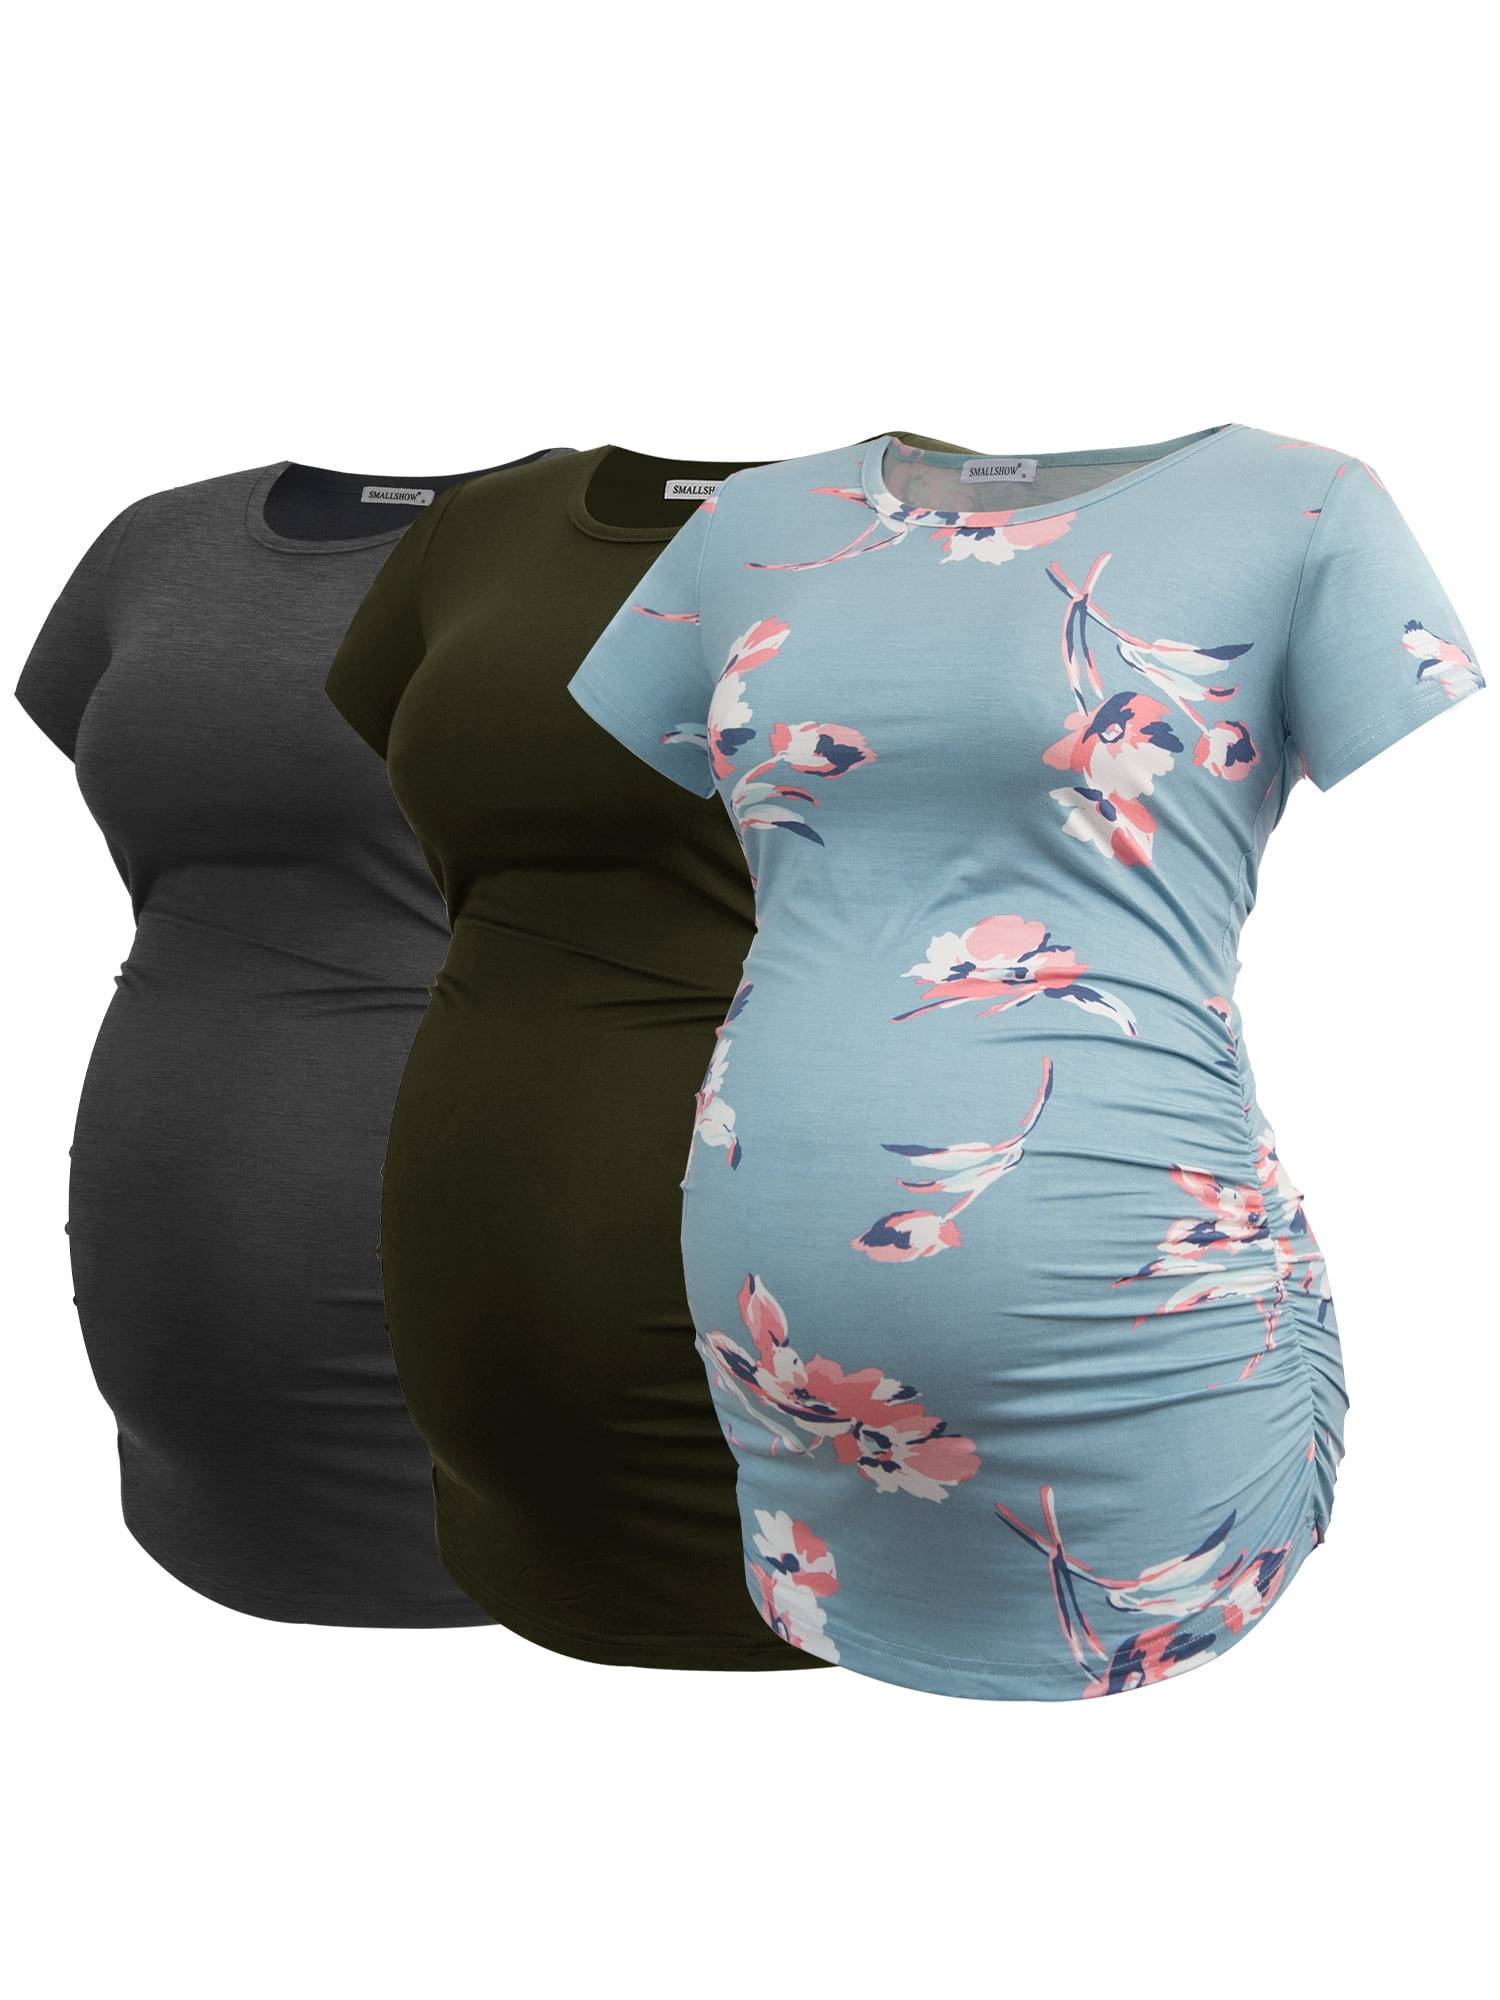  Maternity Shirts Dressy Women's Maternity Tops 3 Pack